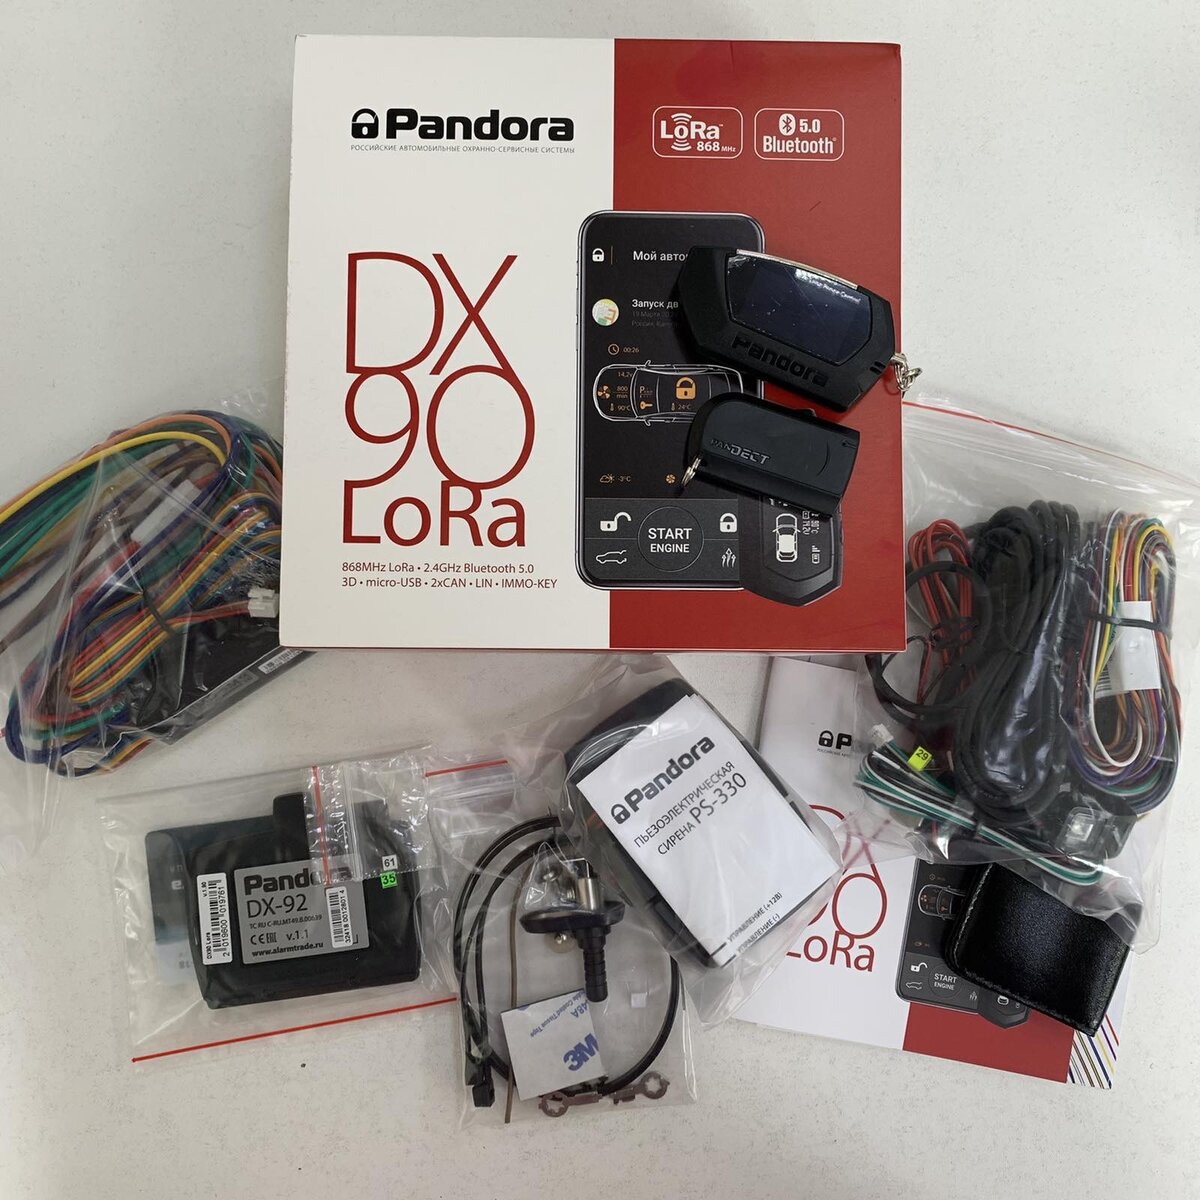 Pandora Dx9x и Pandora Dx90Lora - какую выбрать?